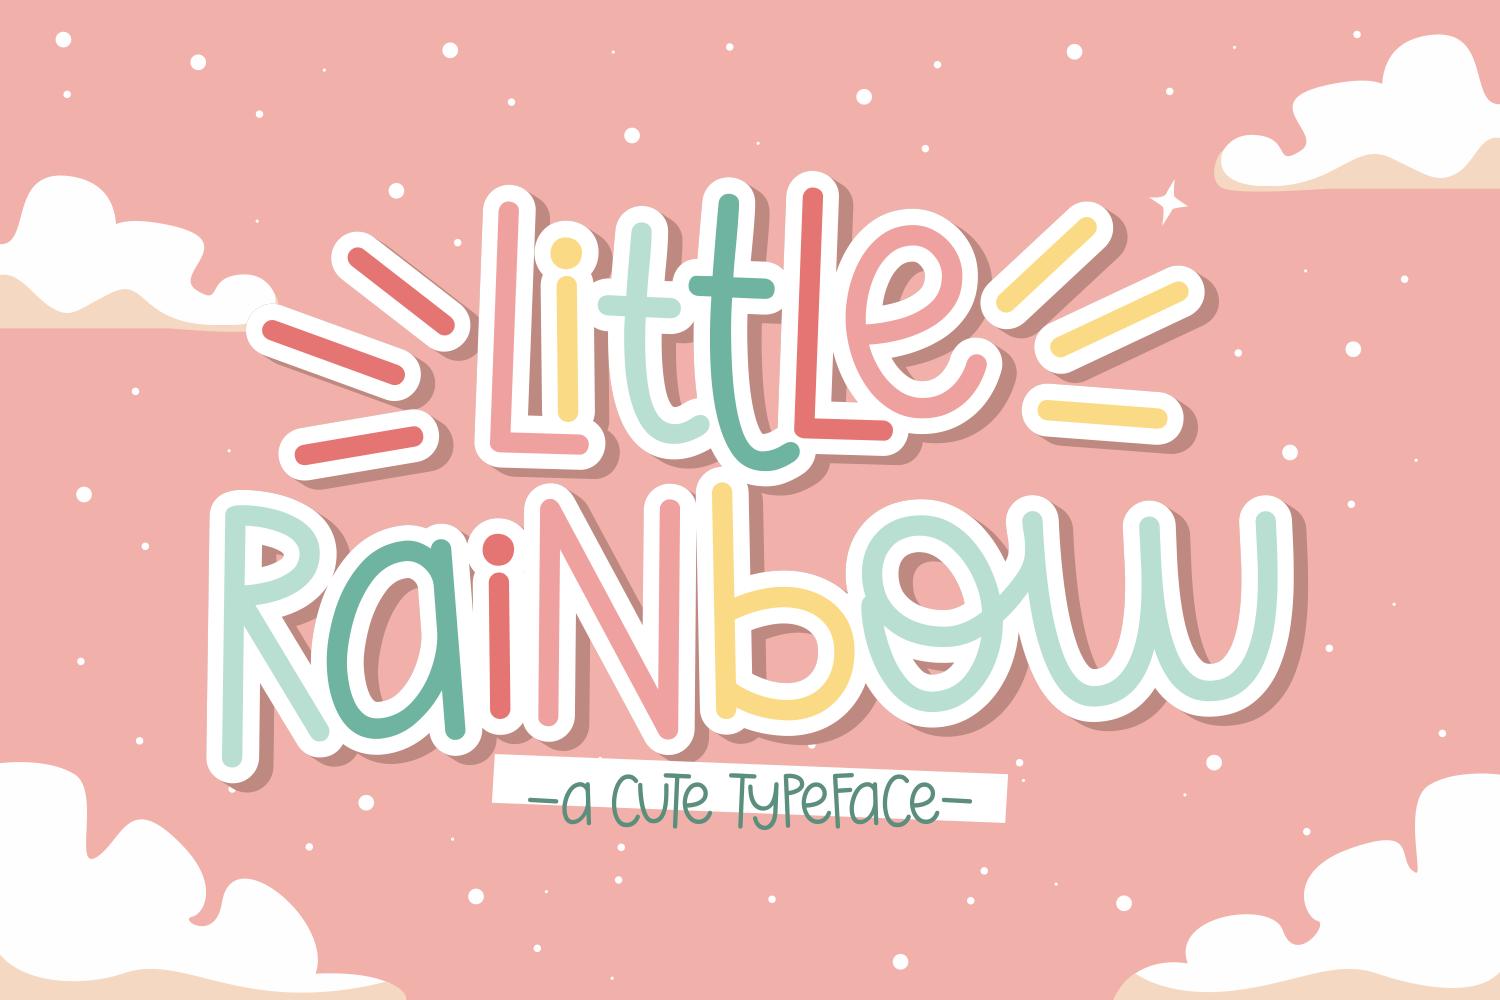 Little Rainbow Font